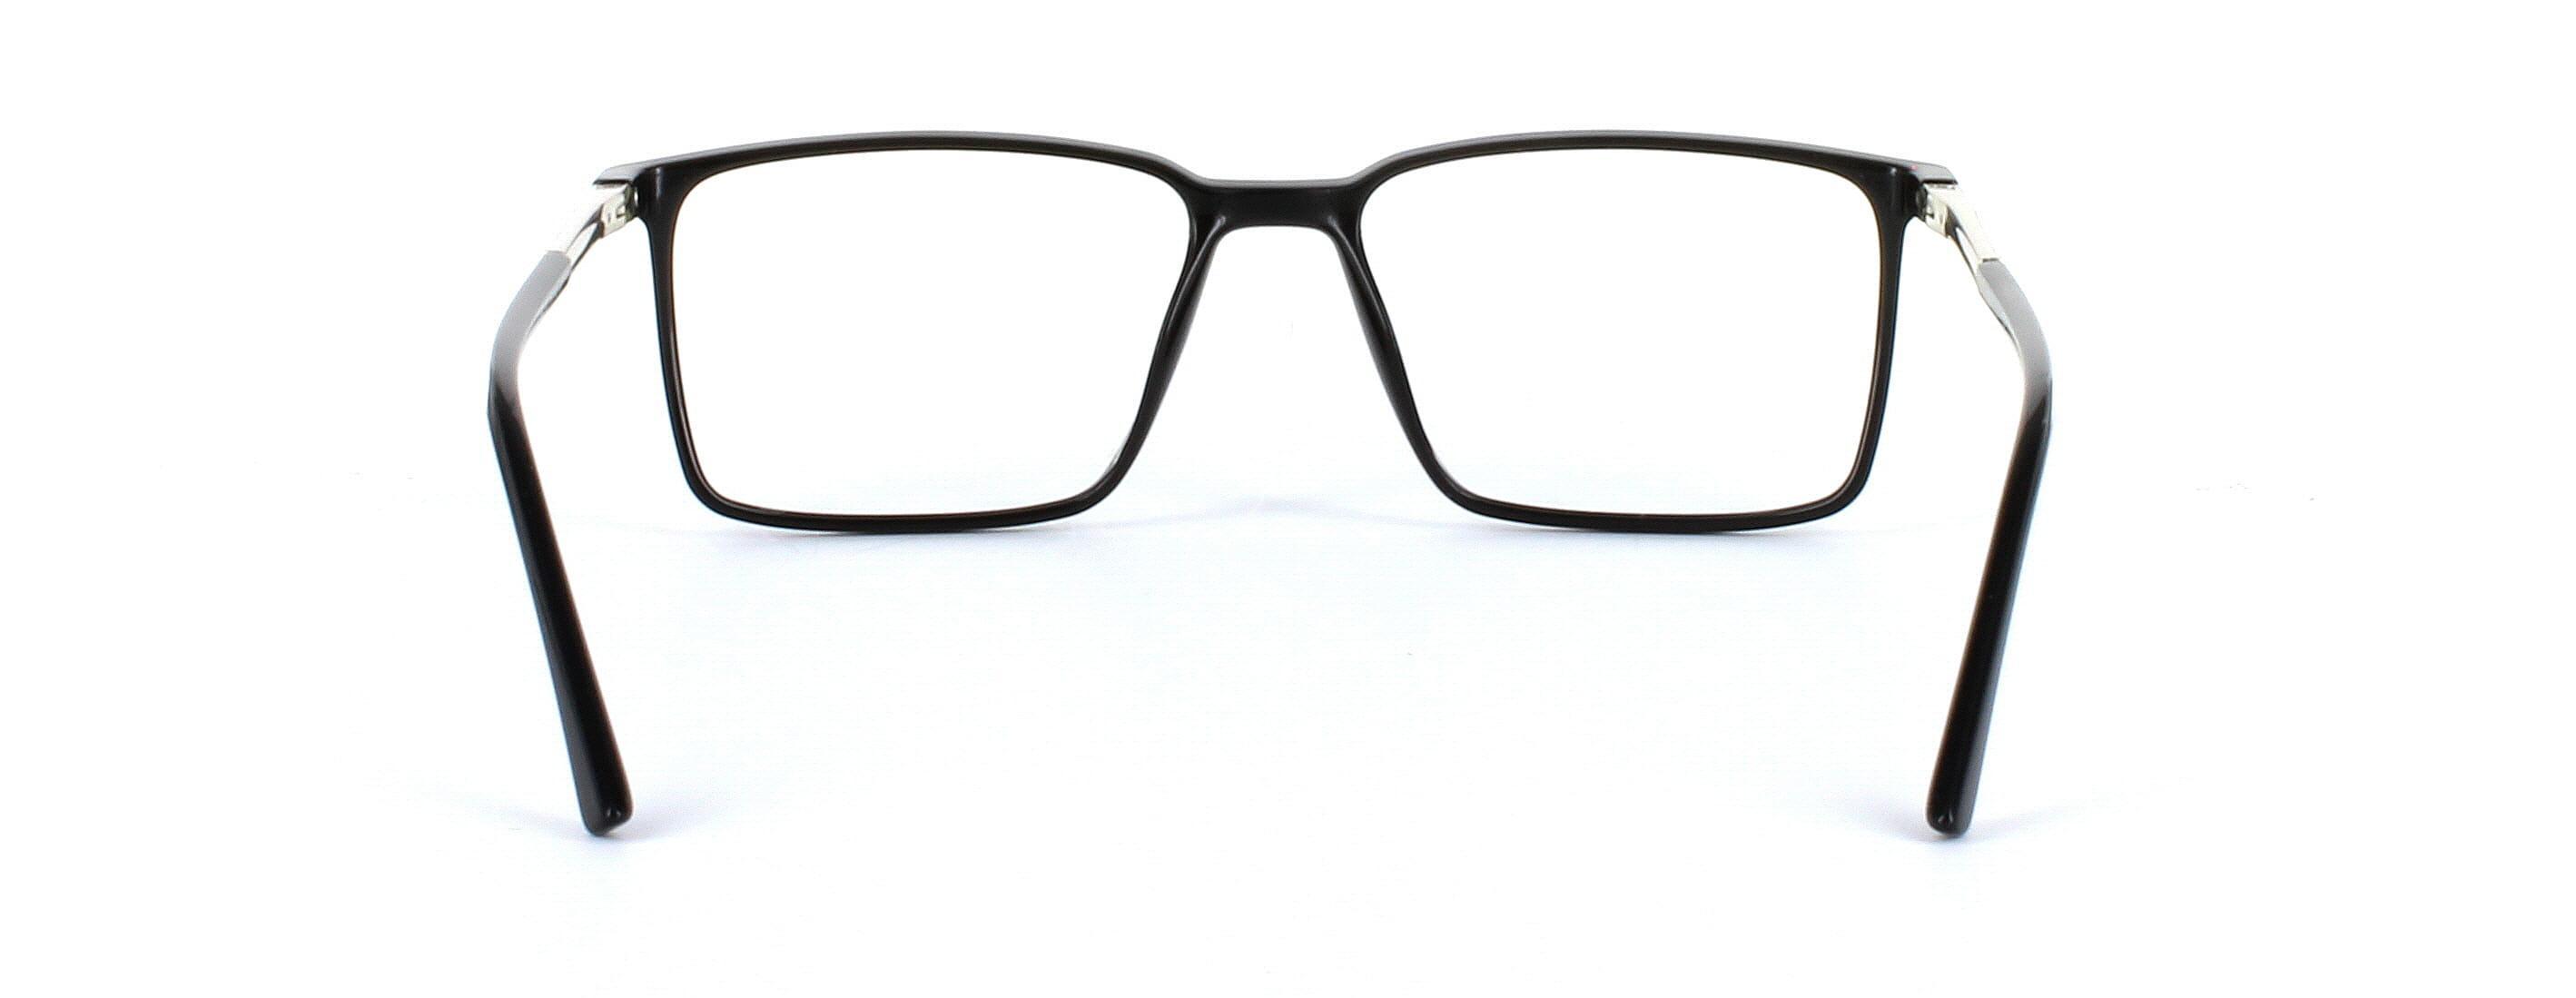 Preveza - Unisex aceate glasses - image view 3